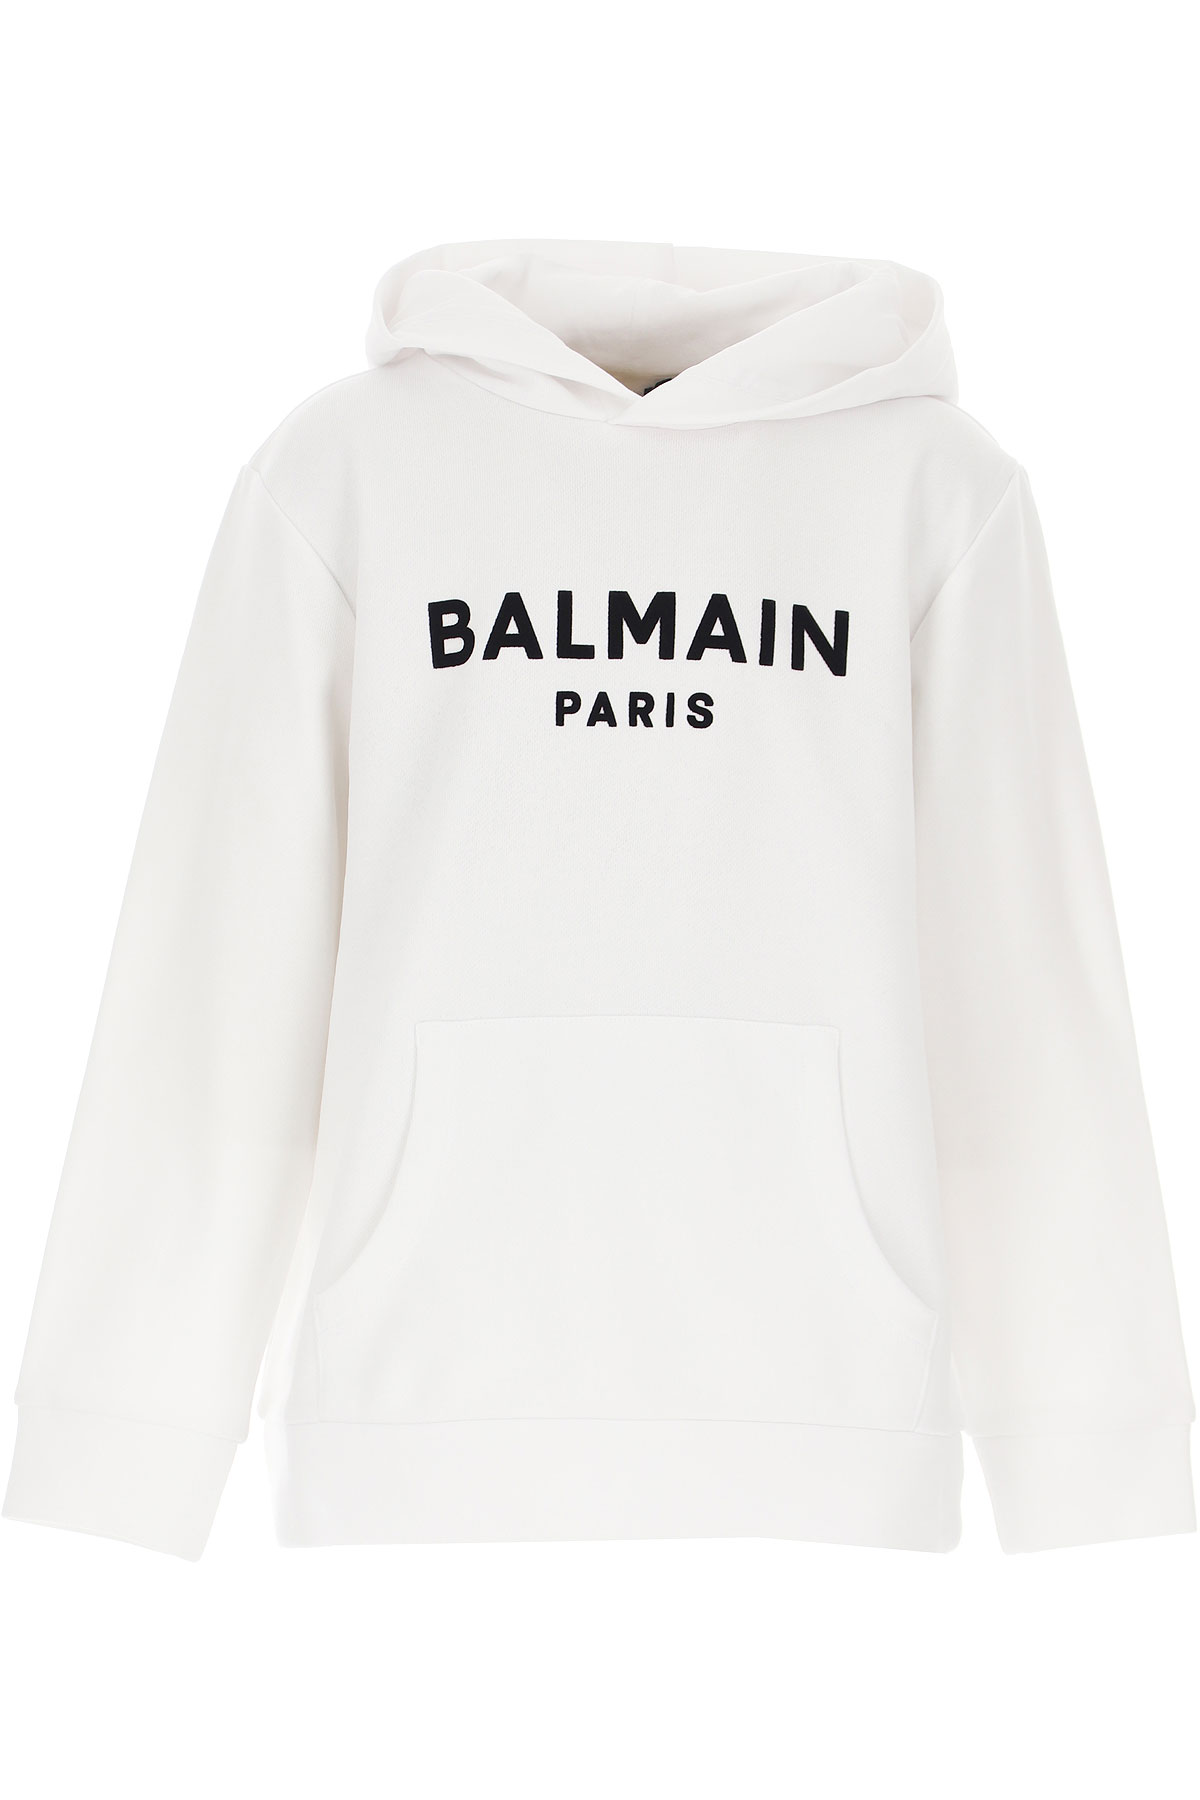 Kidswear Balmain, Style code: 6p4540-z0002-100ne